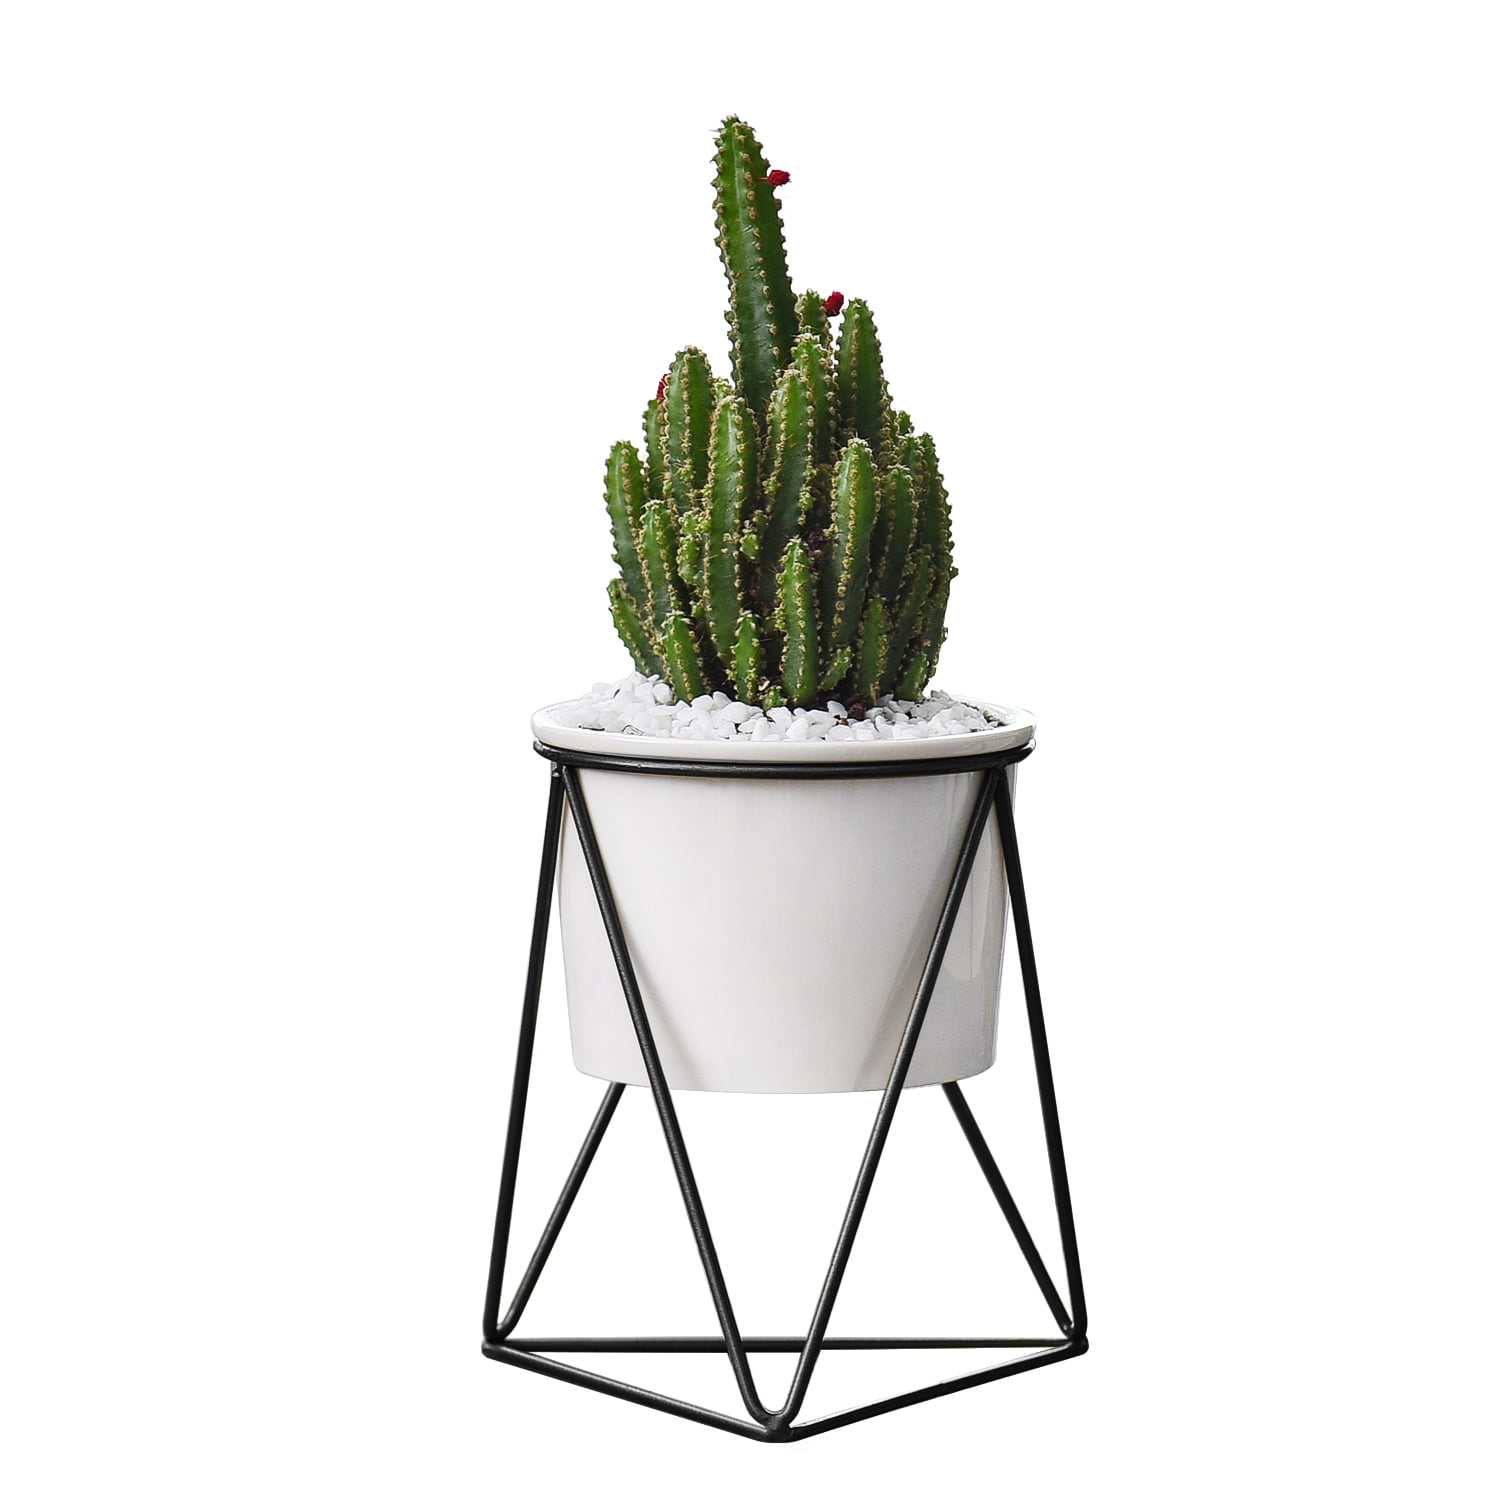 ❤ Ceramic Flower Vase Geometric Metal Rack Plant Pot Display Stand Holder Decor 